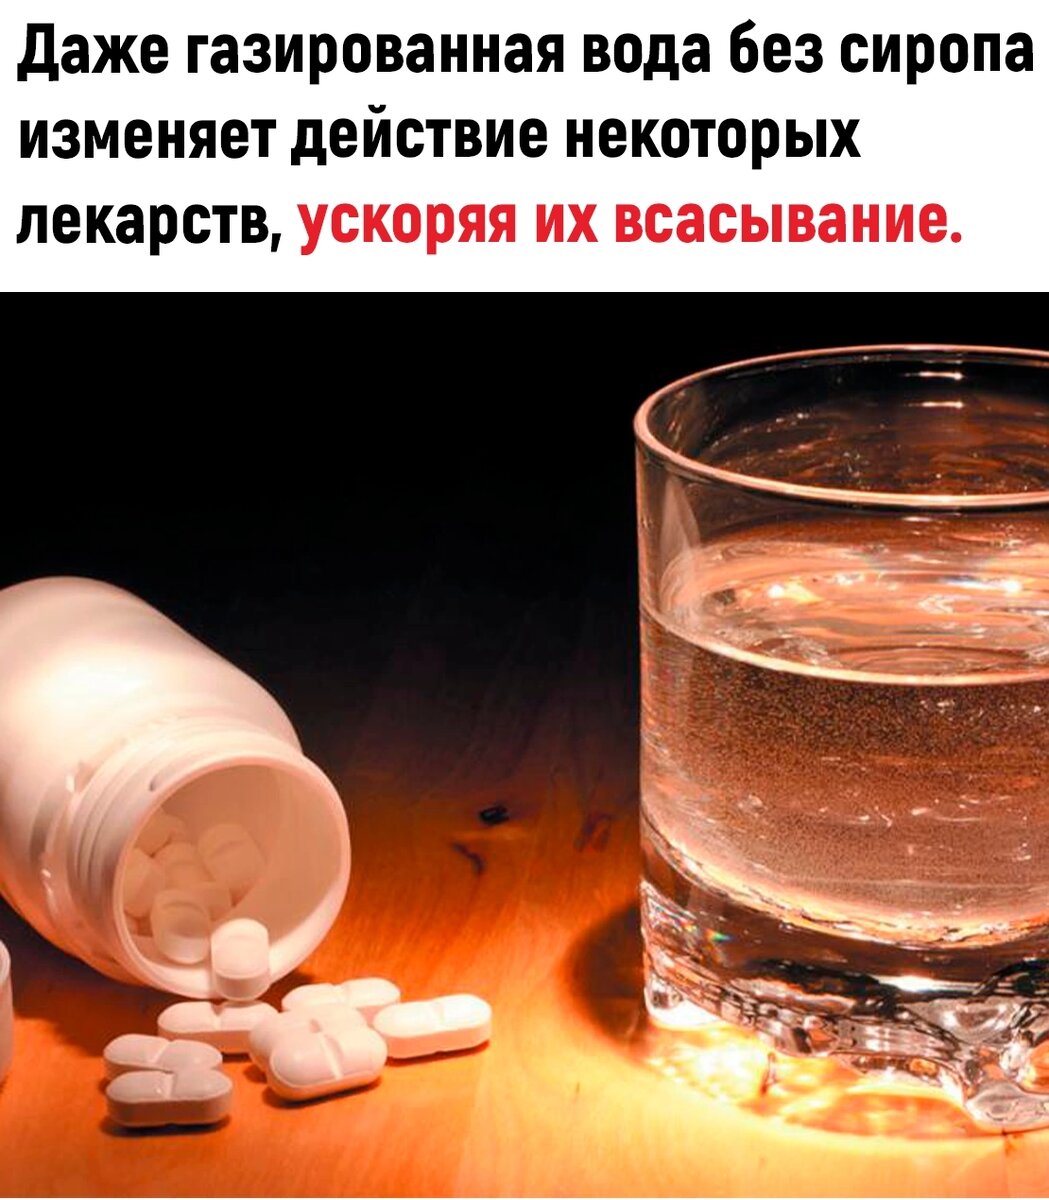 Painkiller drug. Таблекта и стакан воды. Лекарства в воде. Таблетки и стакан воды.